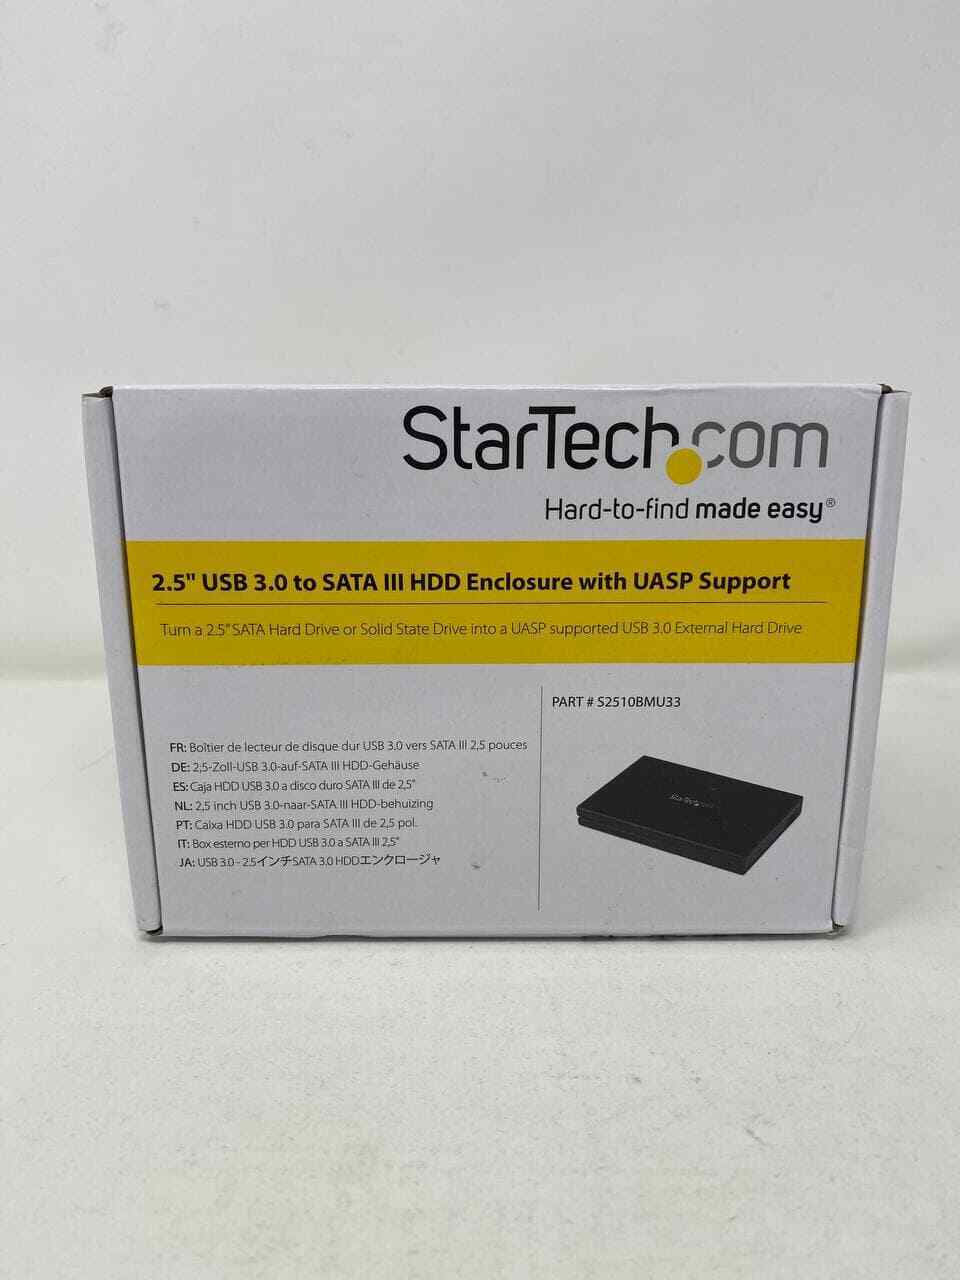 Startech S2510BPU33 2.5in USB 3.0 to SATA III HDD Enclosure Drive UASP